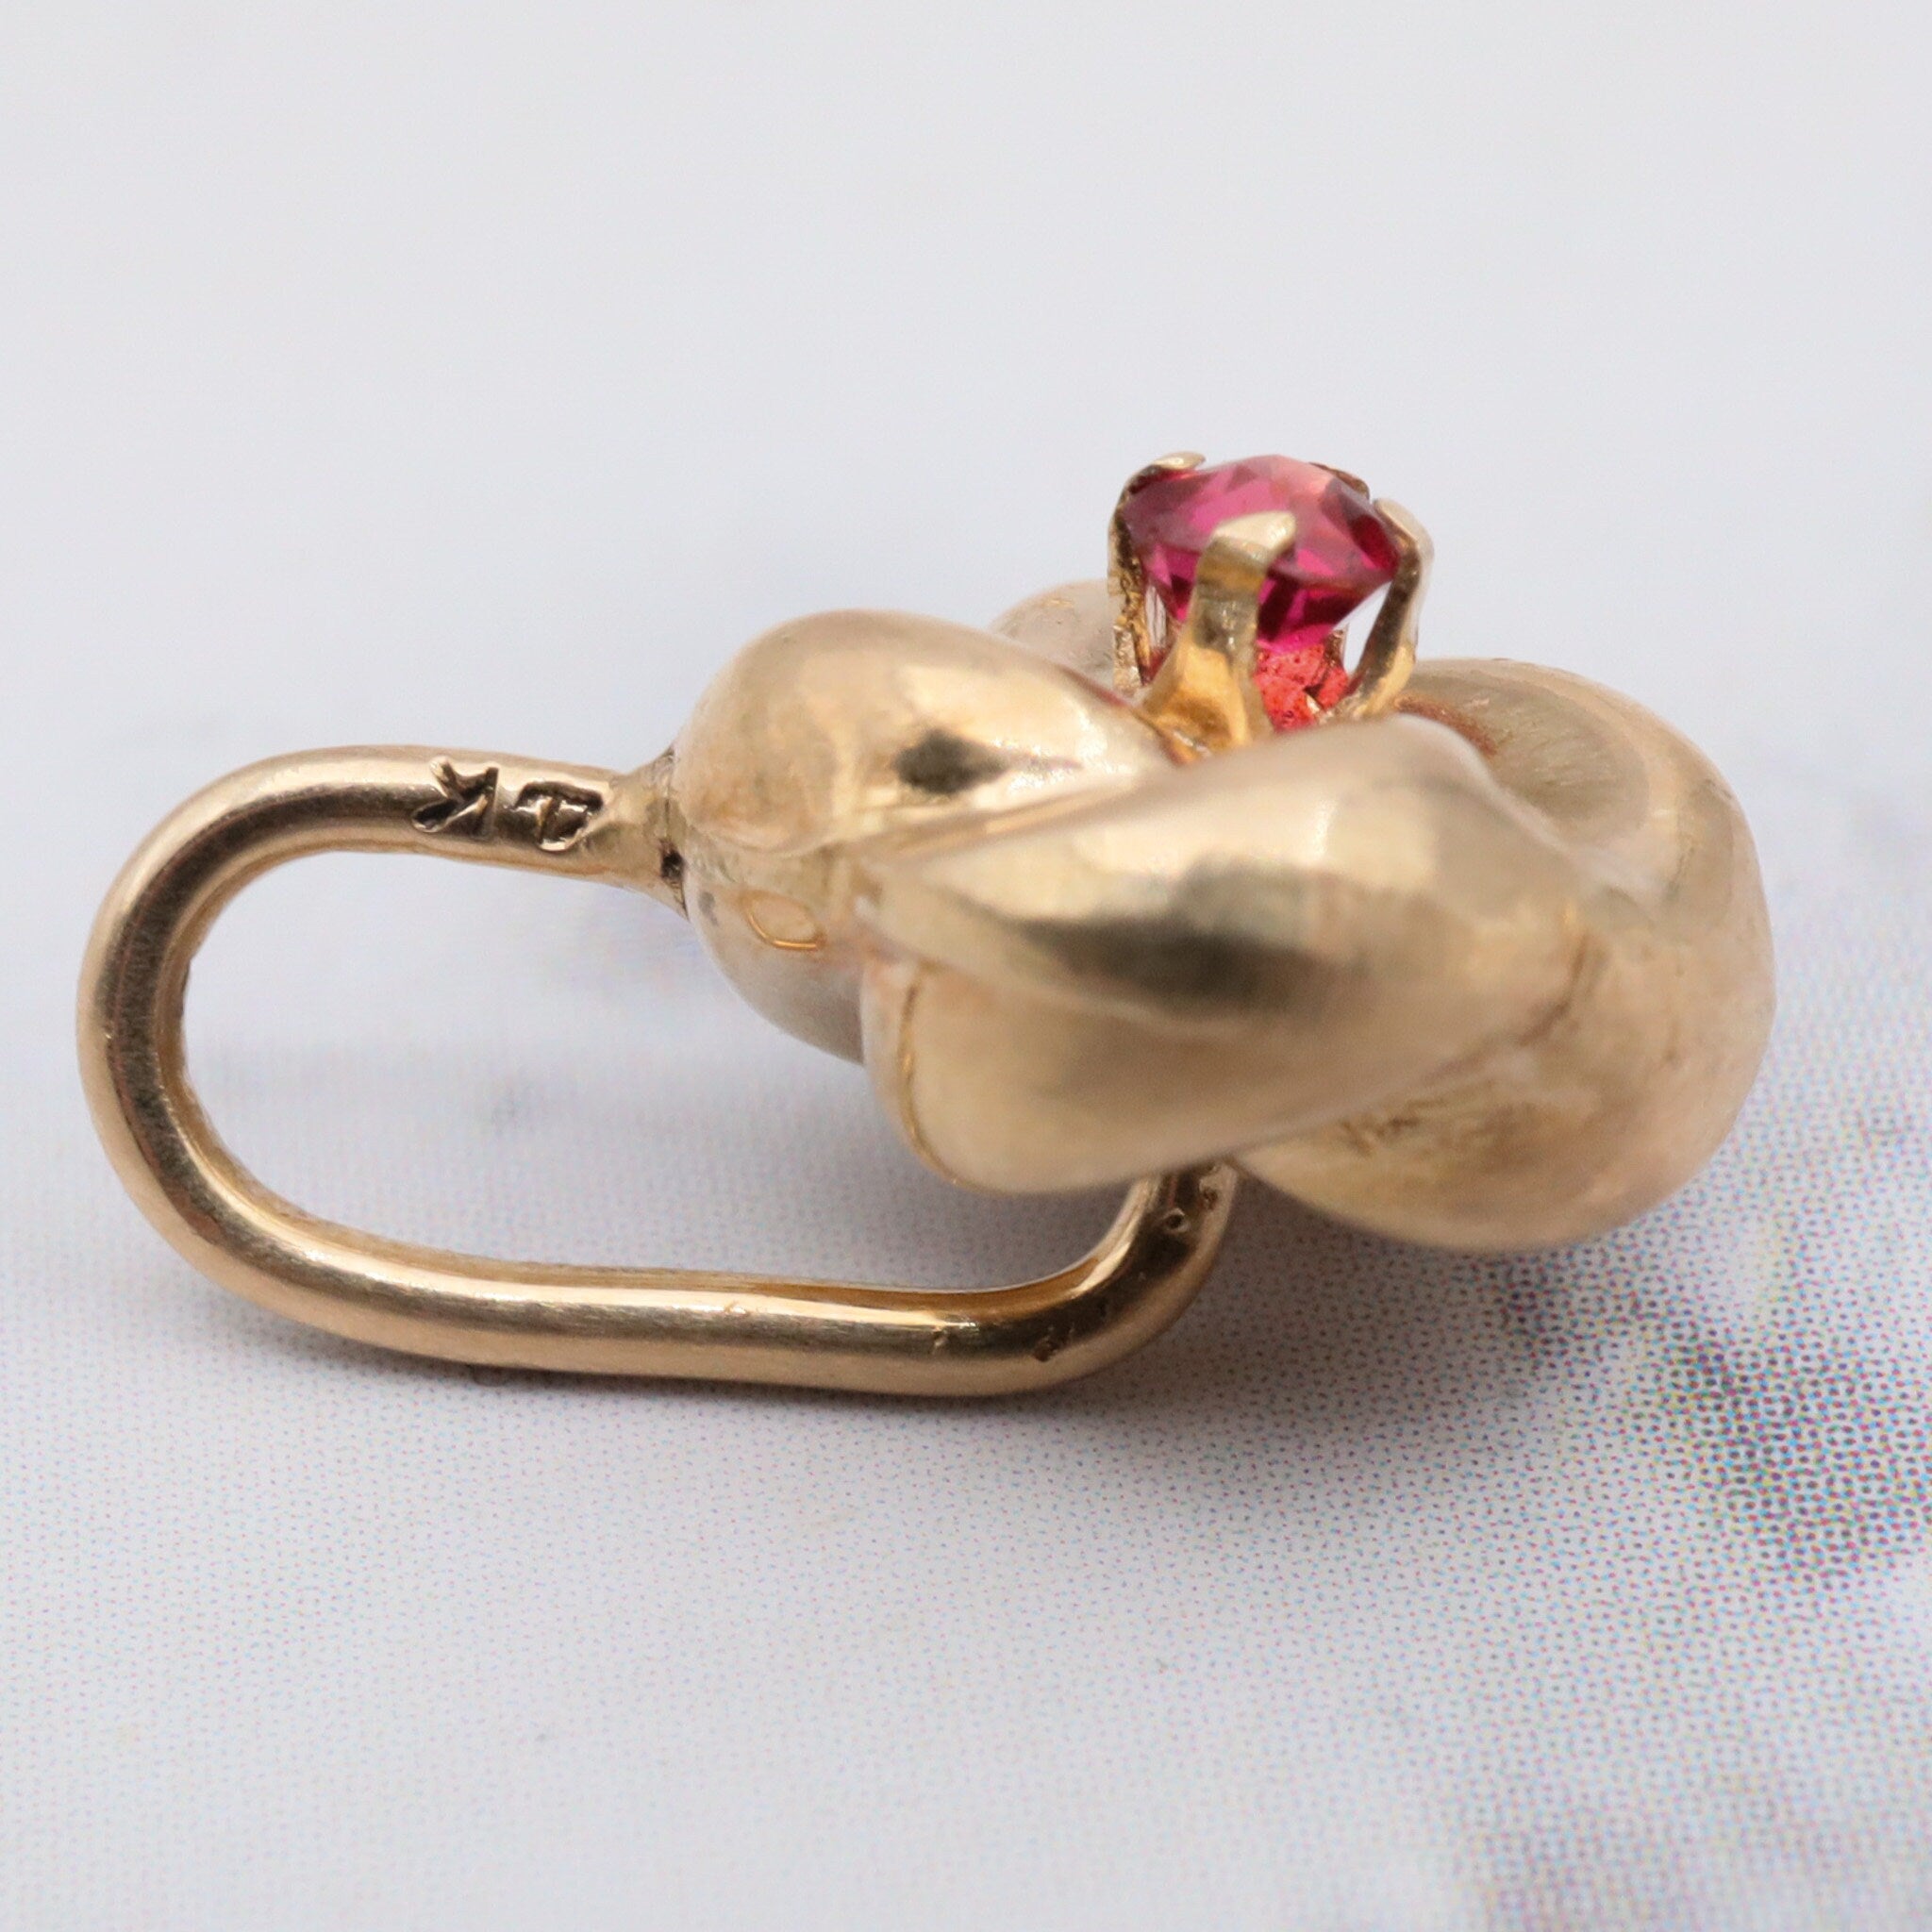 Antique victorian 14K gold & ruby glass pendant